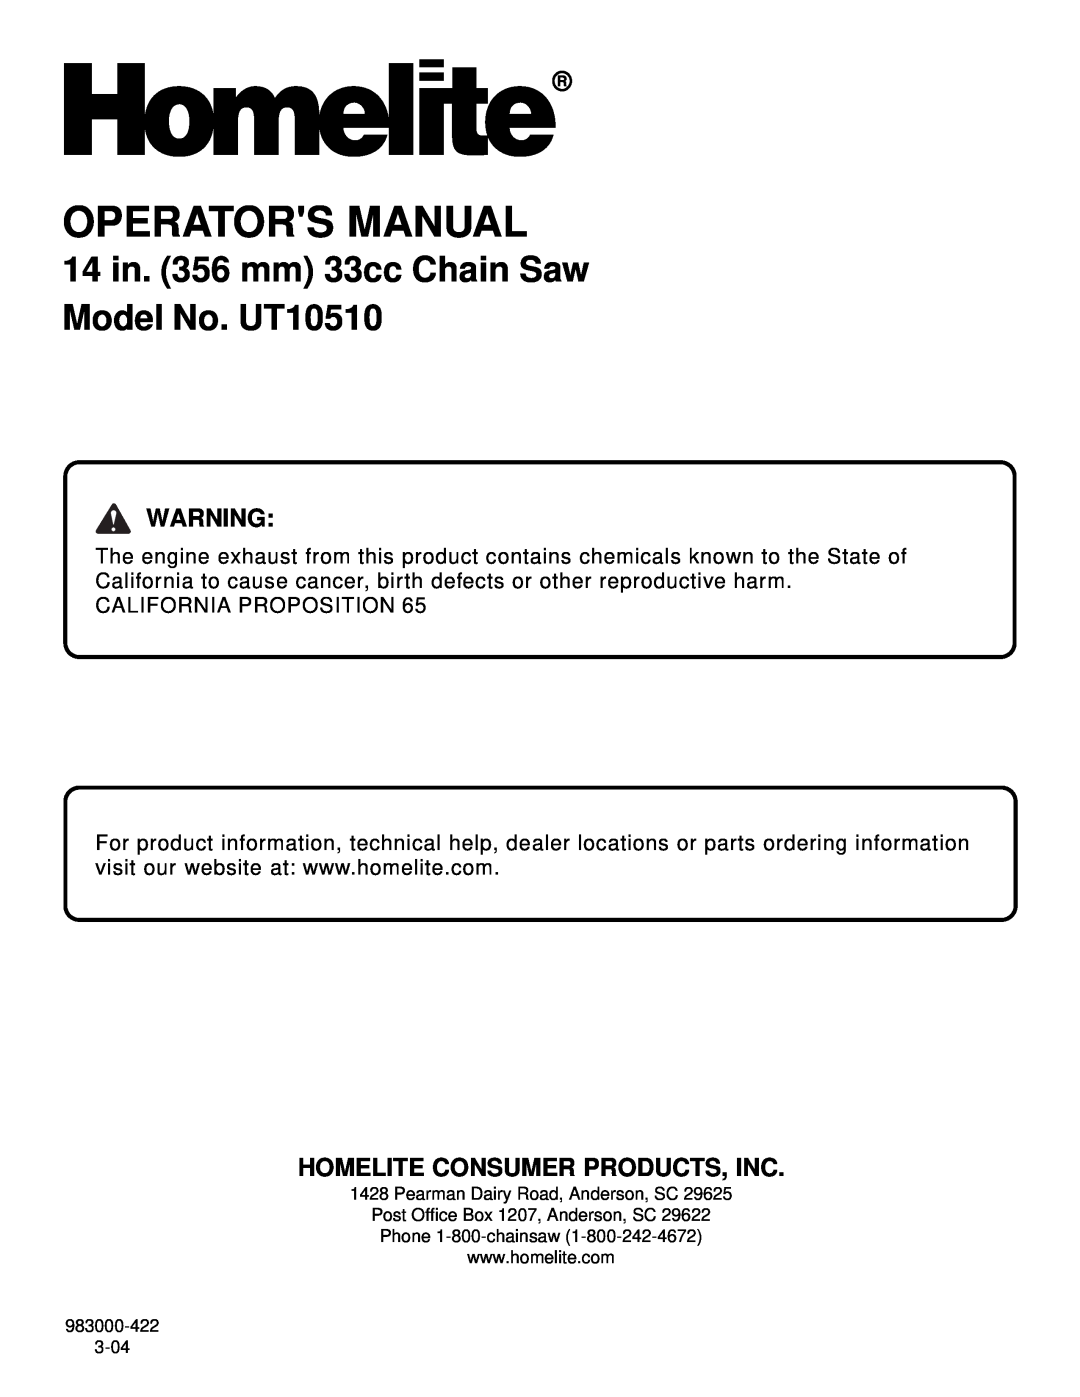 Homelite manual Homelite Consumer Products, Inc, Operators Manual, 14 in. 356 mm 33cc Chain Saw Model No. UT10510 